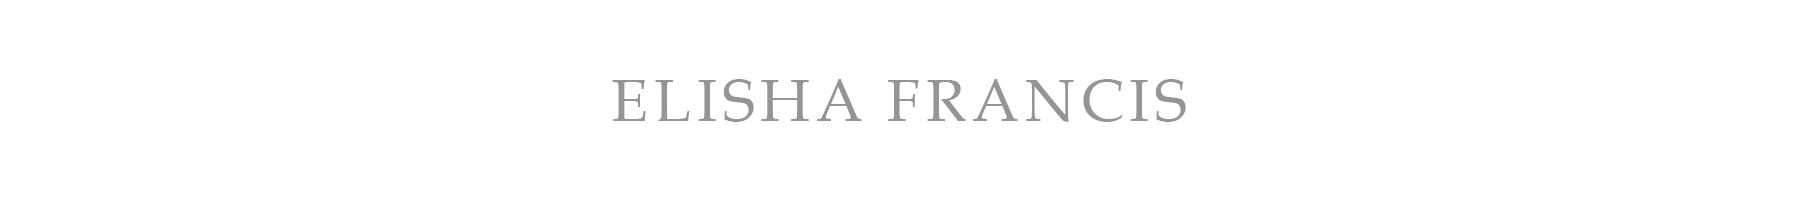 elisha francis logo